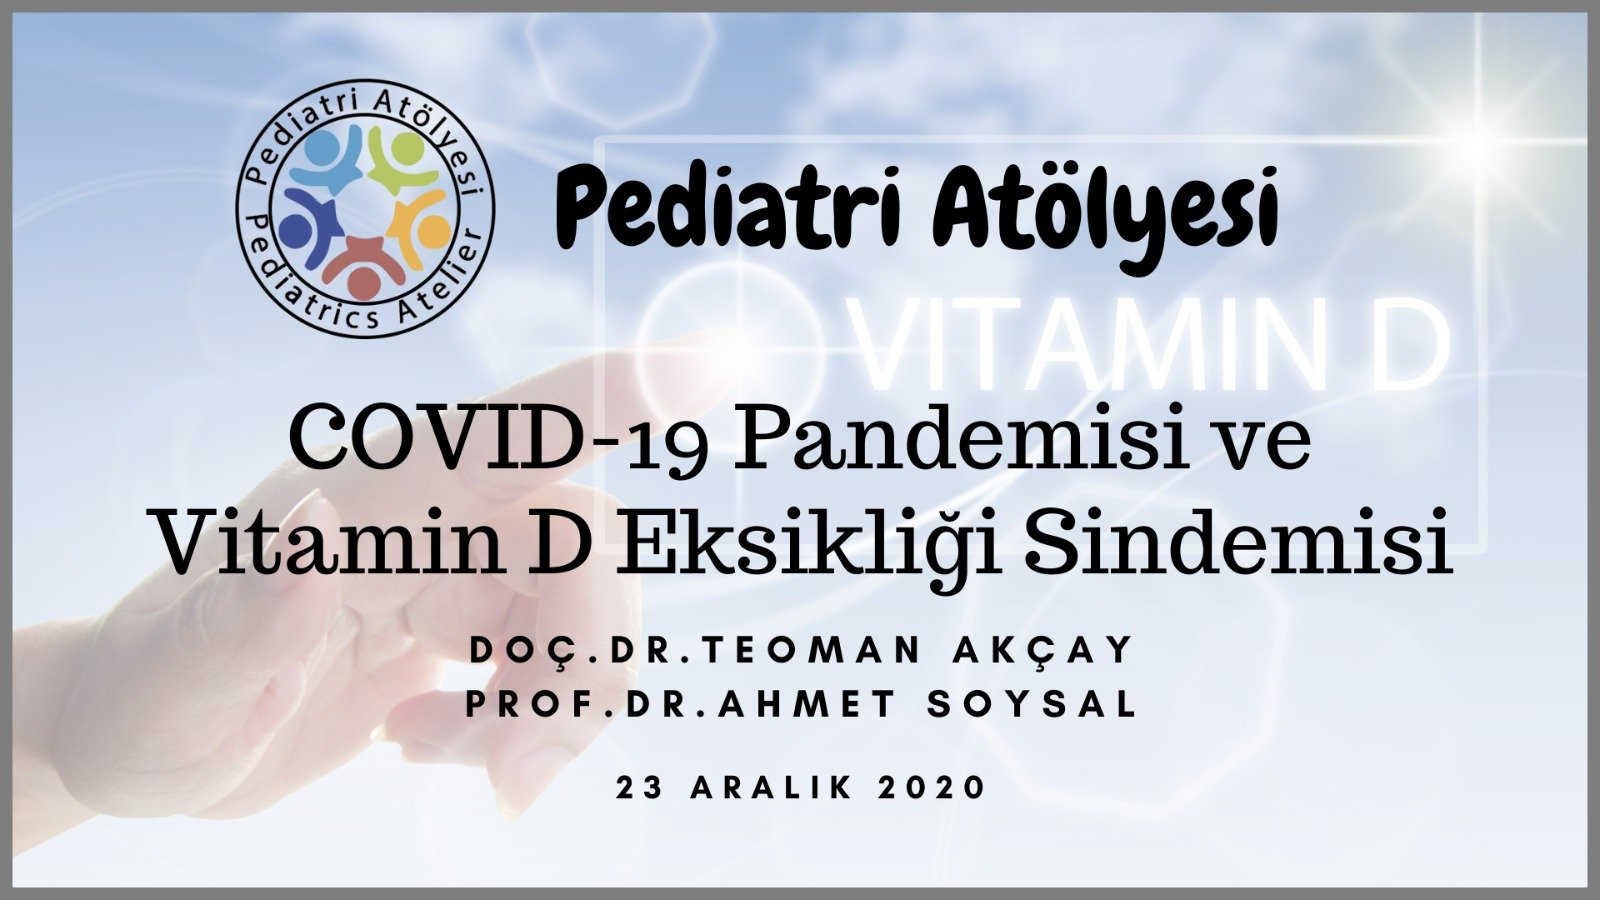 COVID-19 Pandemisi ve Vitamin D Eksikliği Sindemisi